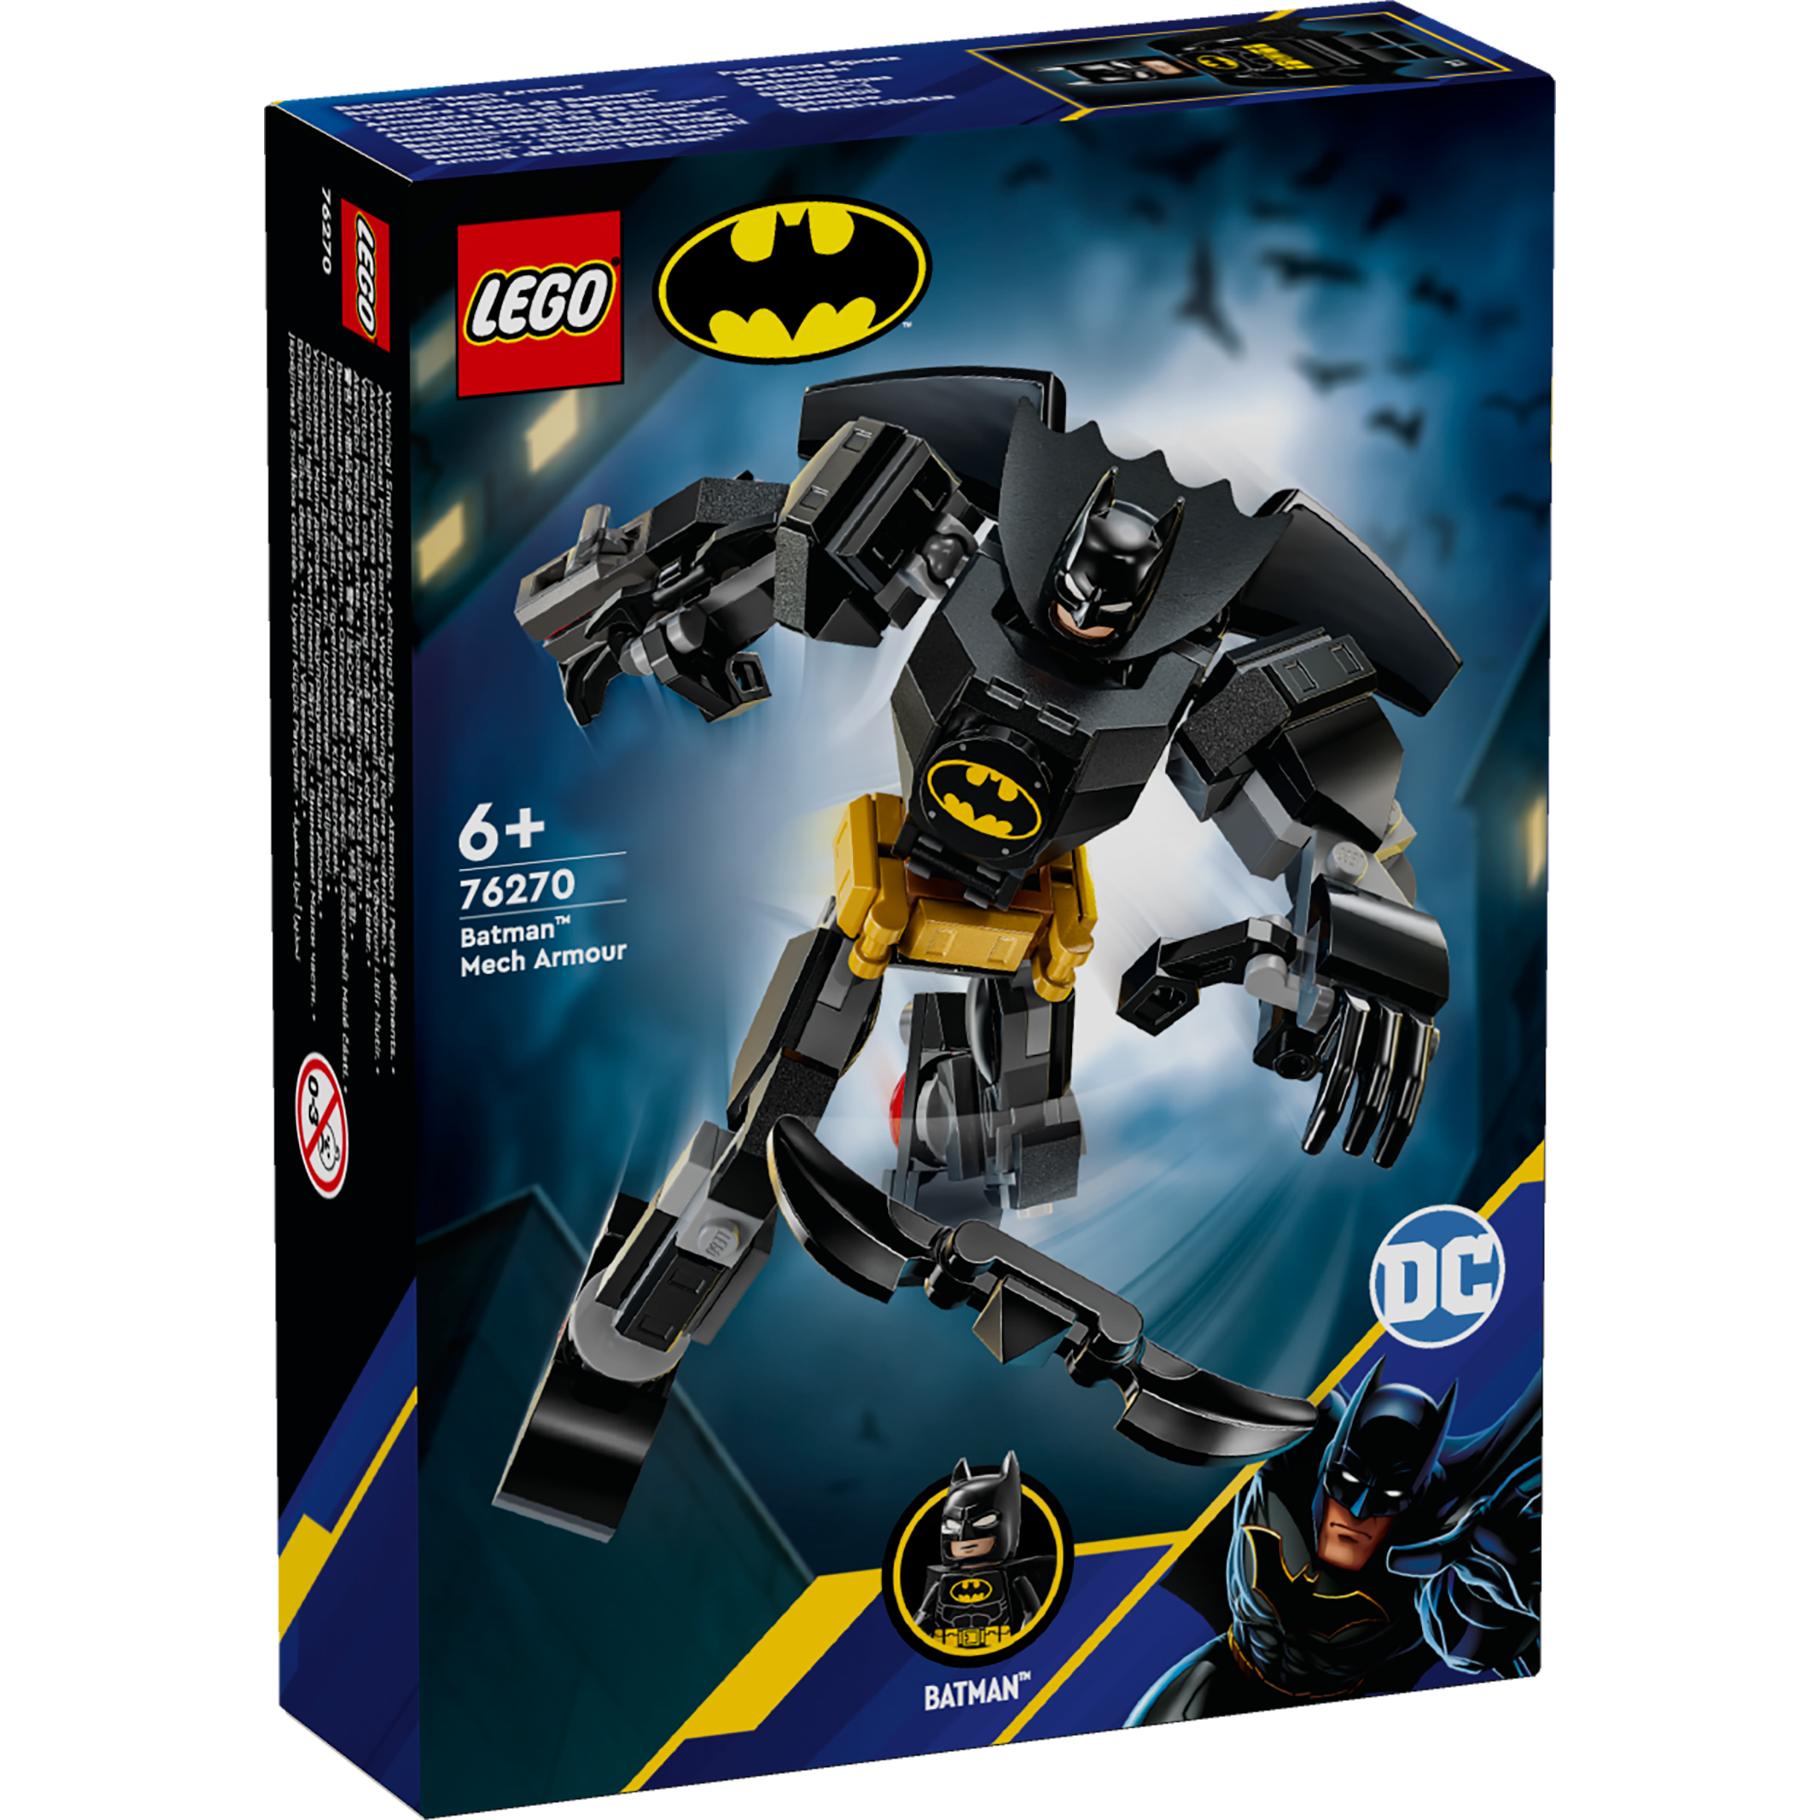 Lego 76270 DC Super Heroes Batman Mech, Konstruktionsspielzeug